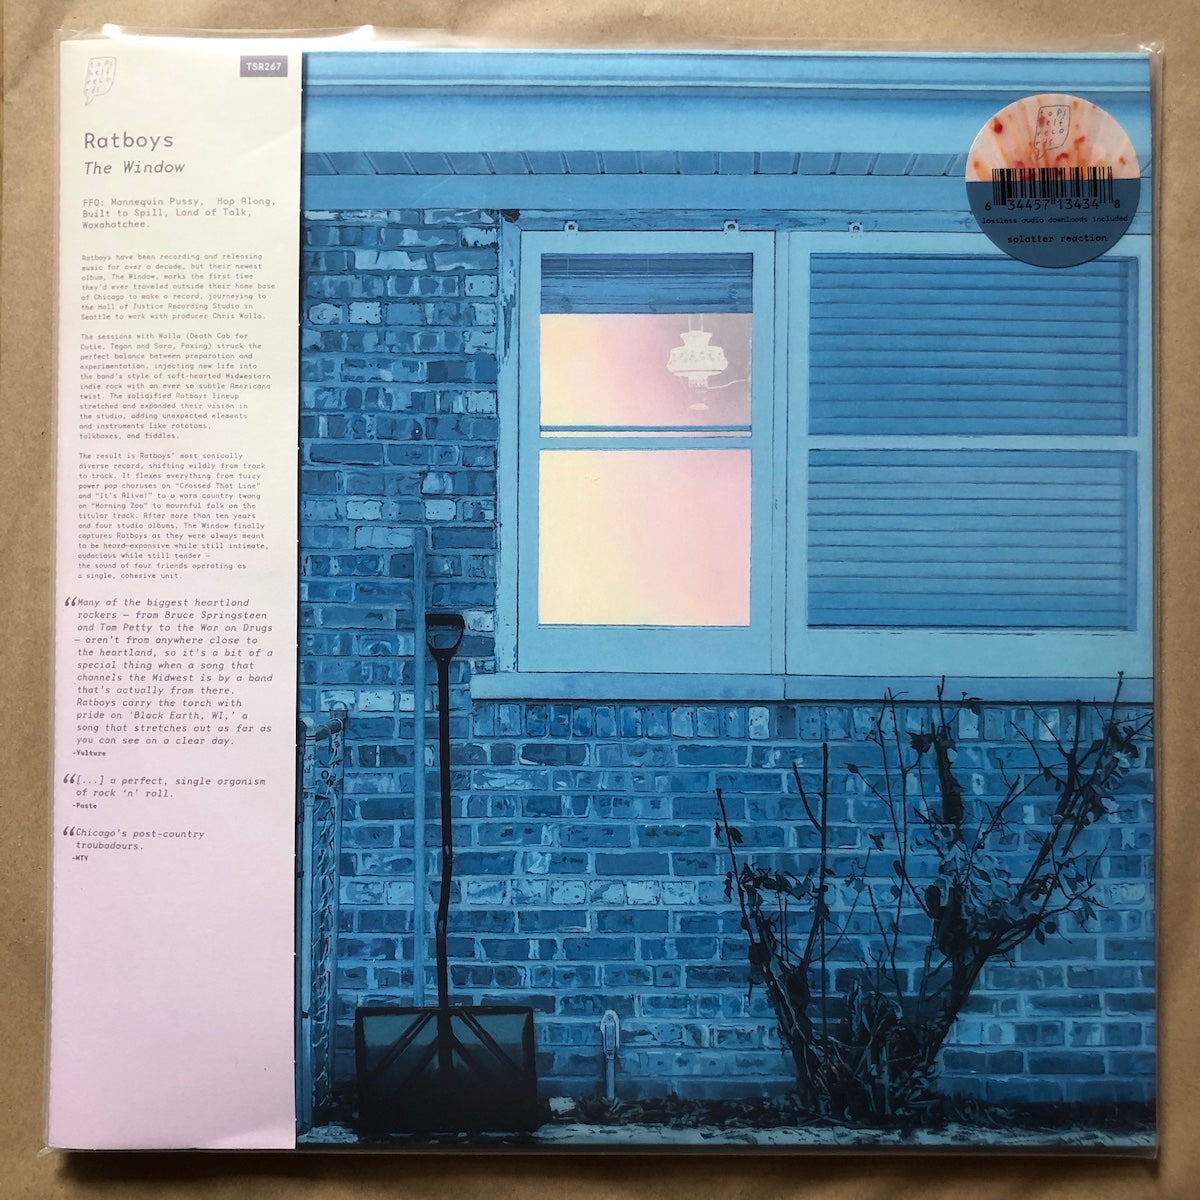 The Window: Fireworks Splatter Double Vinyl LP